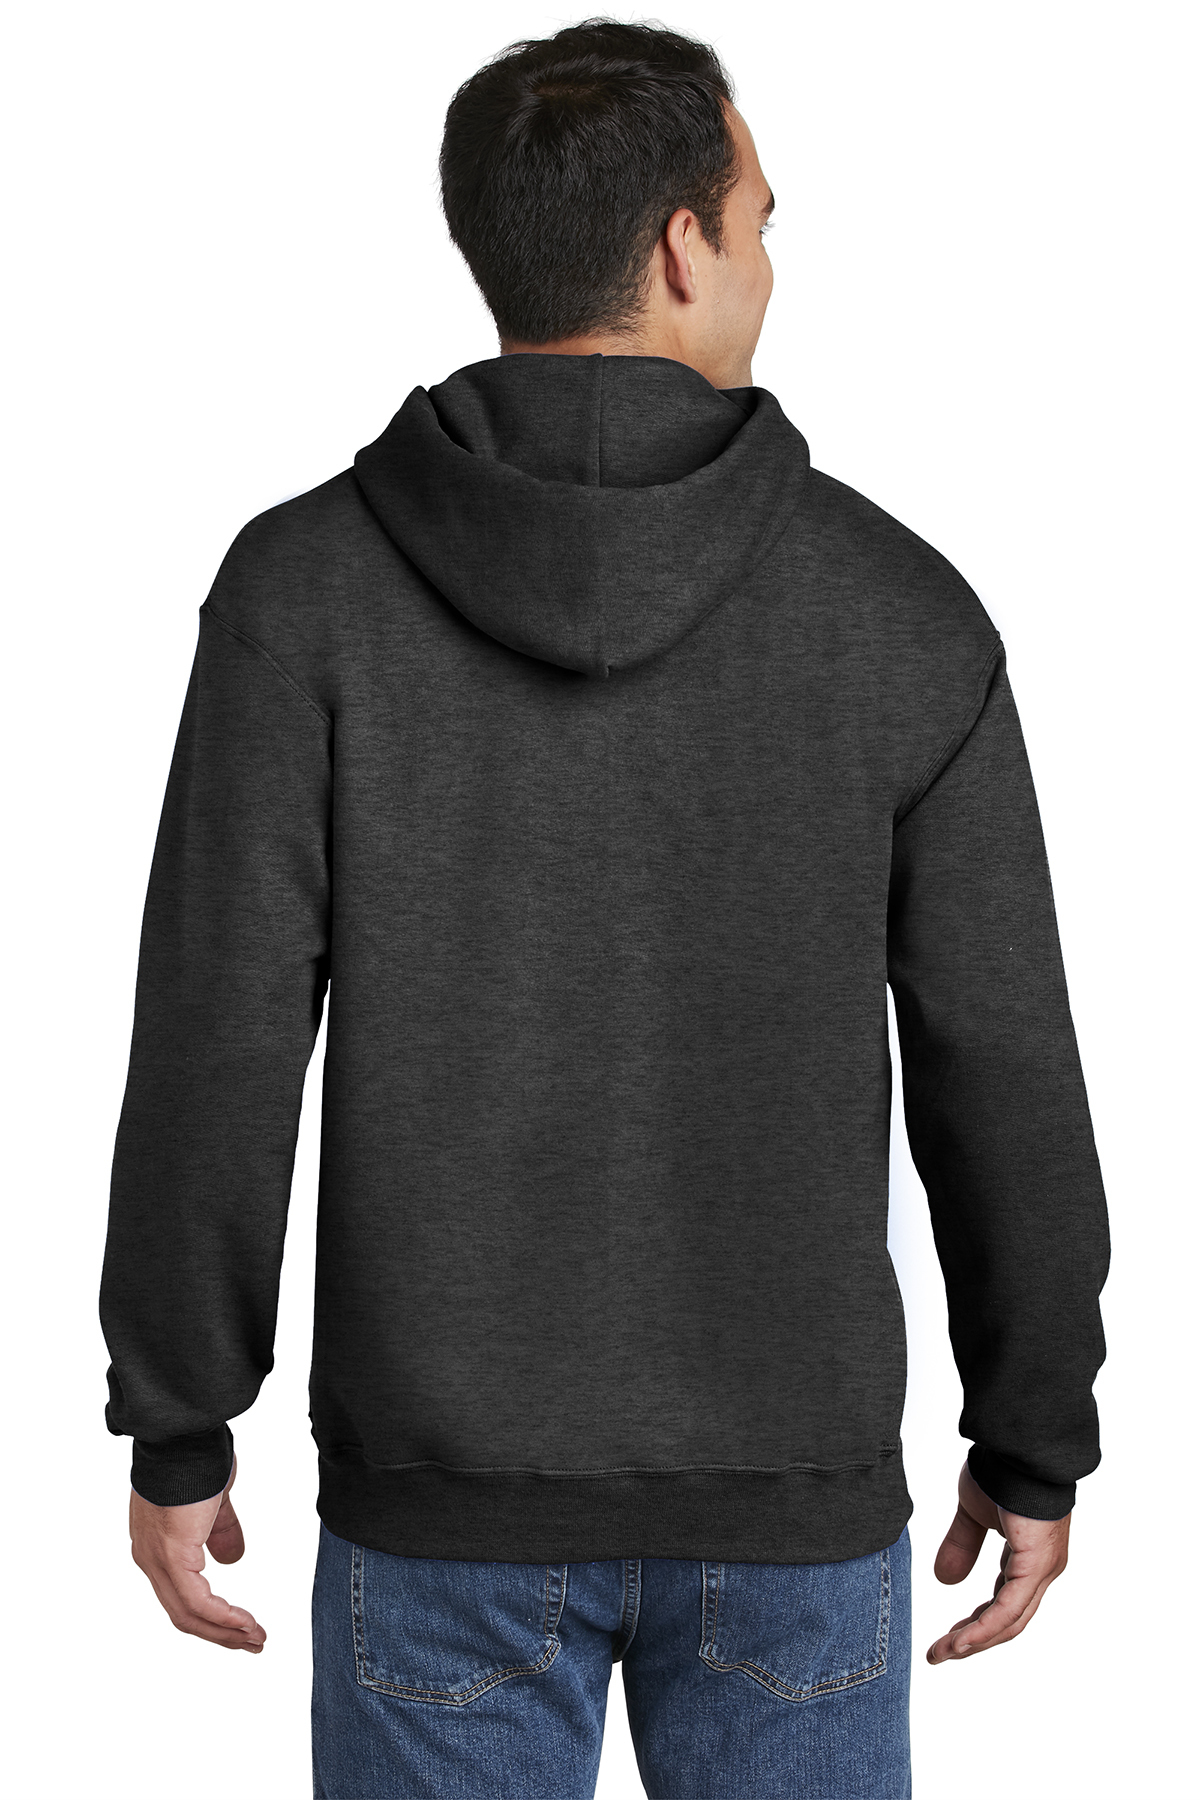 Hanes Ultimate Cotton - Pullover Hooded Sweatshirt | Product | SanMar